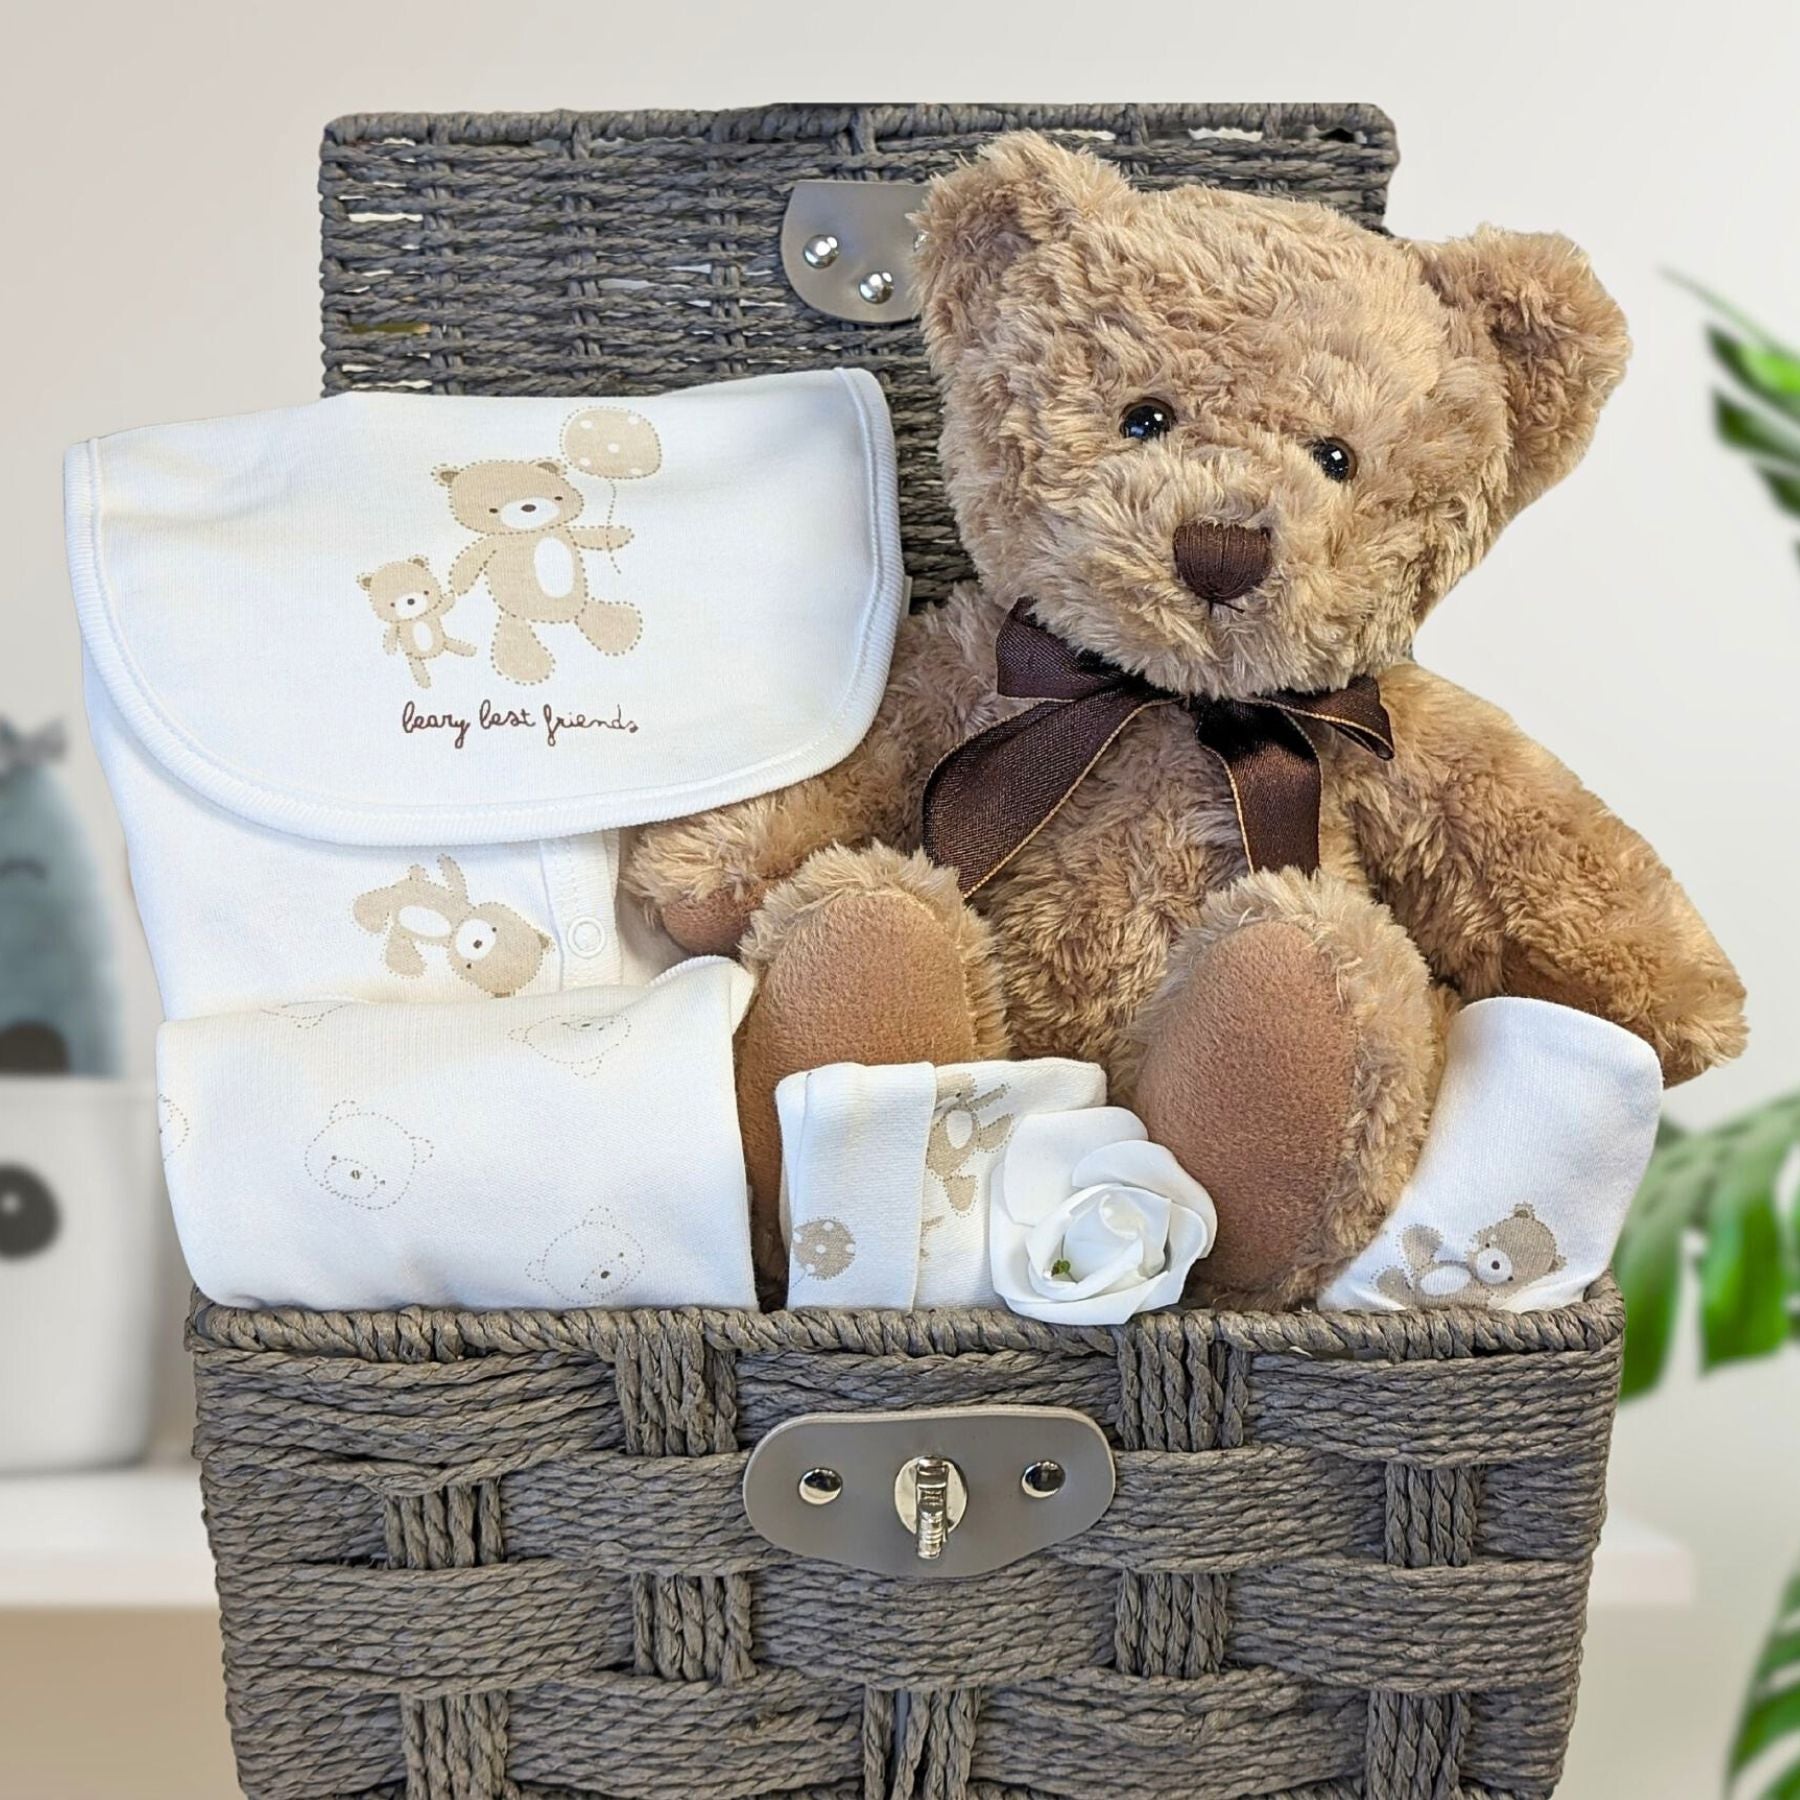 teddy bear gift hamper basket with clothing